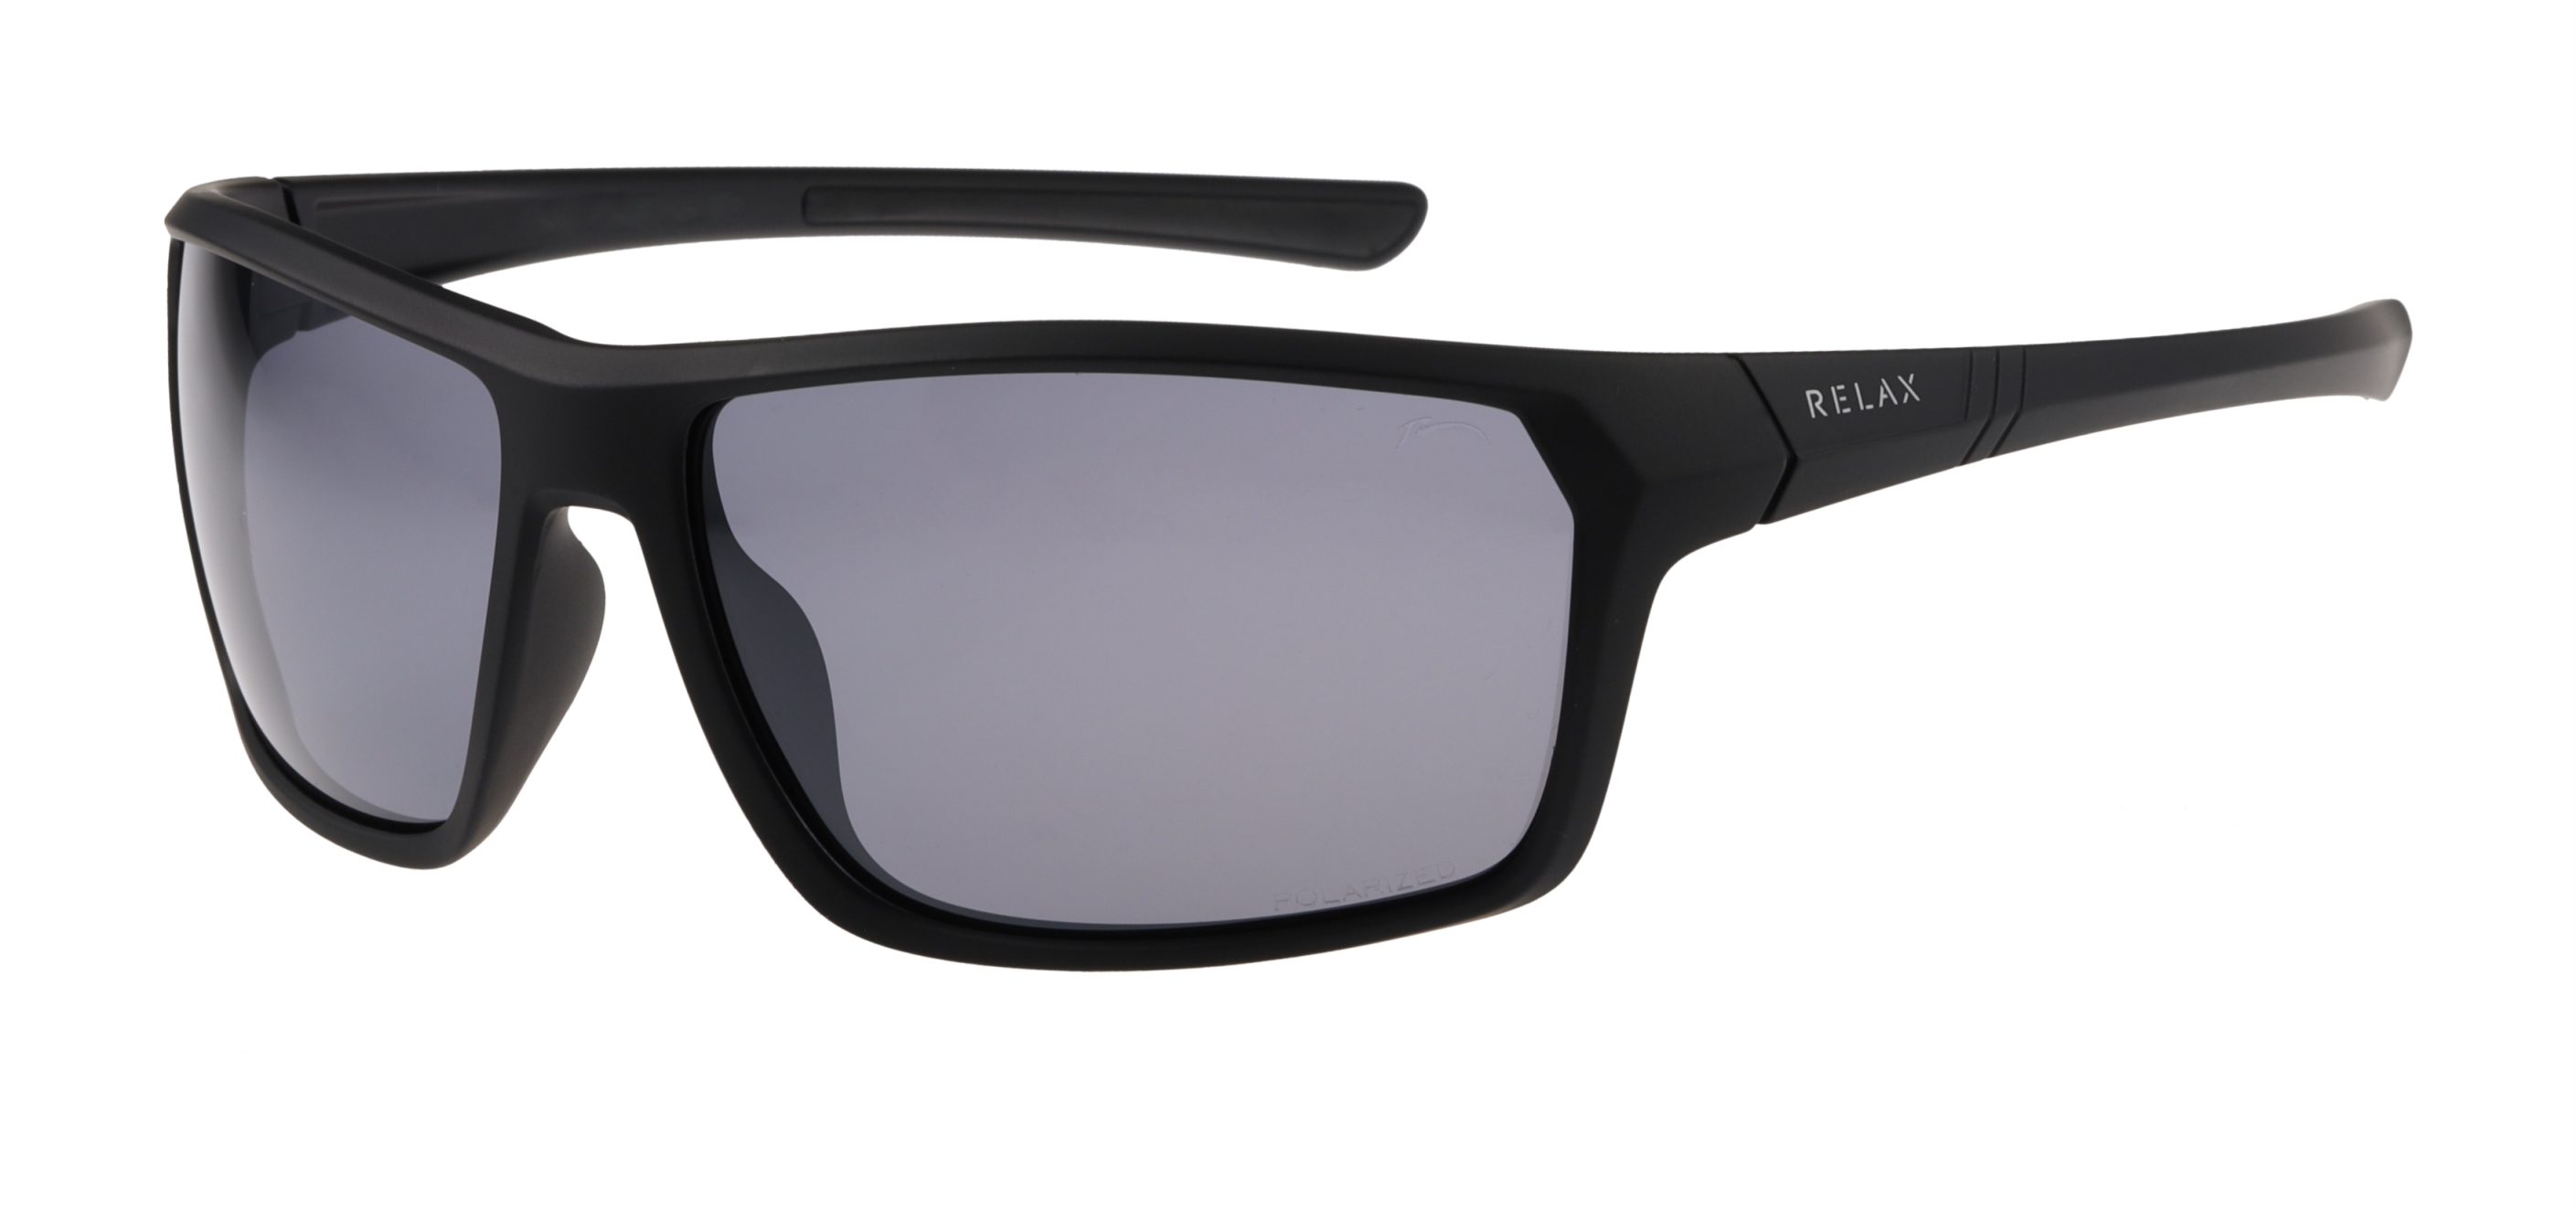 Polarized sport sunglasses  Gifu Relax R5428A standard